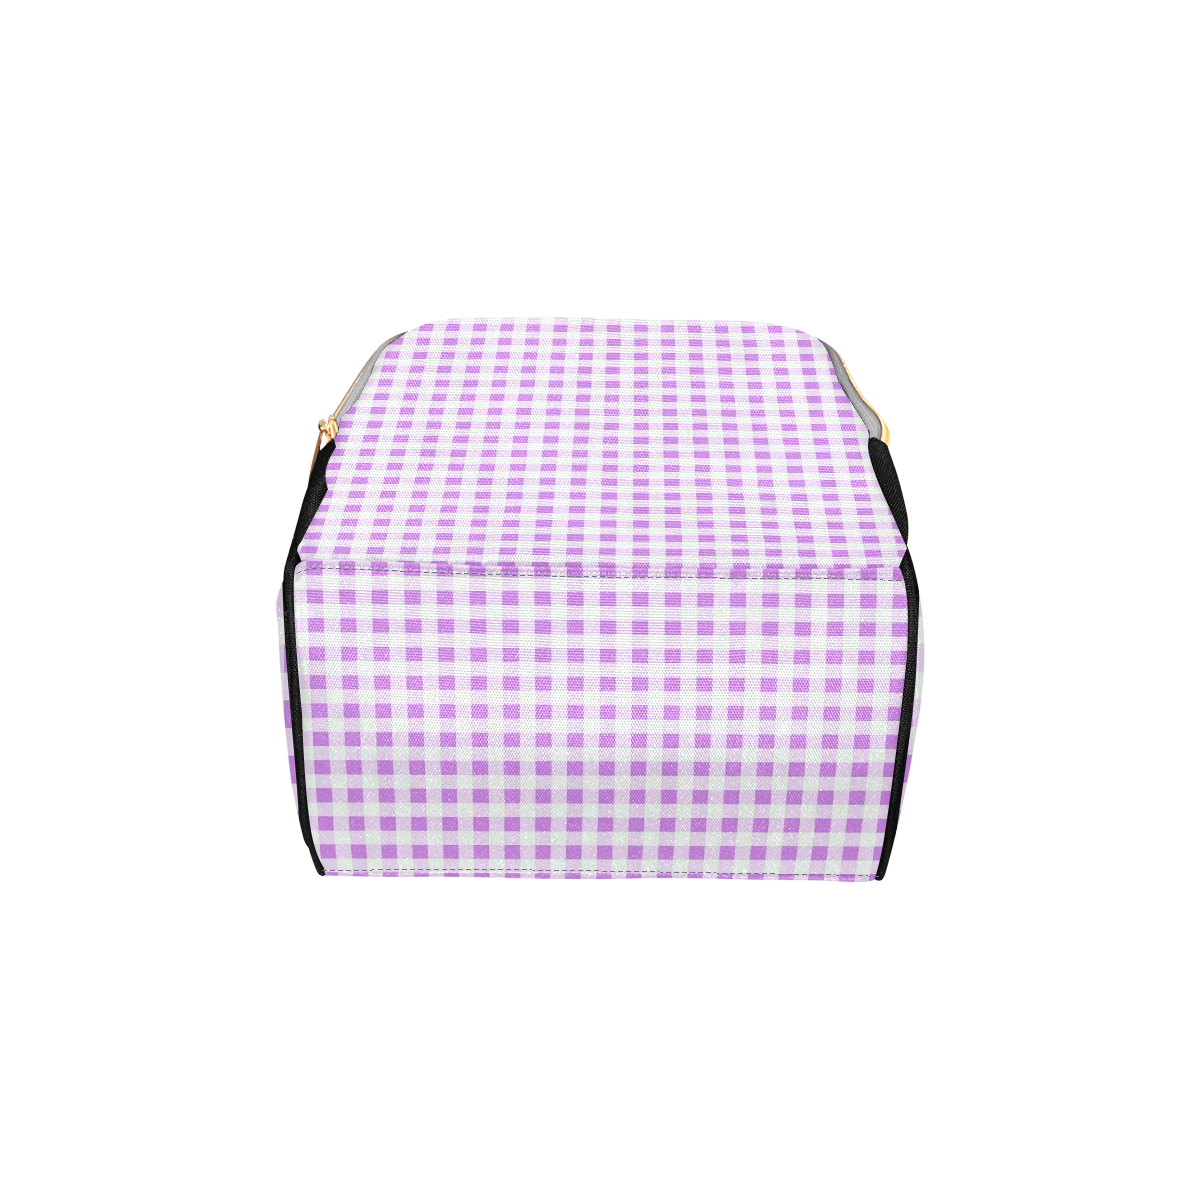 Lavender Gingham Multi-Function Diaper Backpack/Diaper Bag (Model 1688)